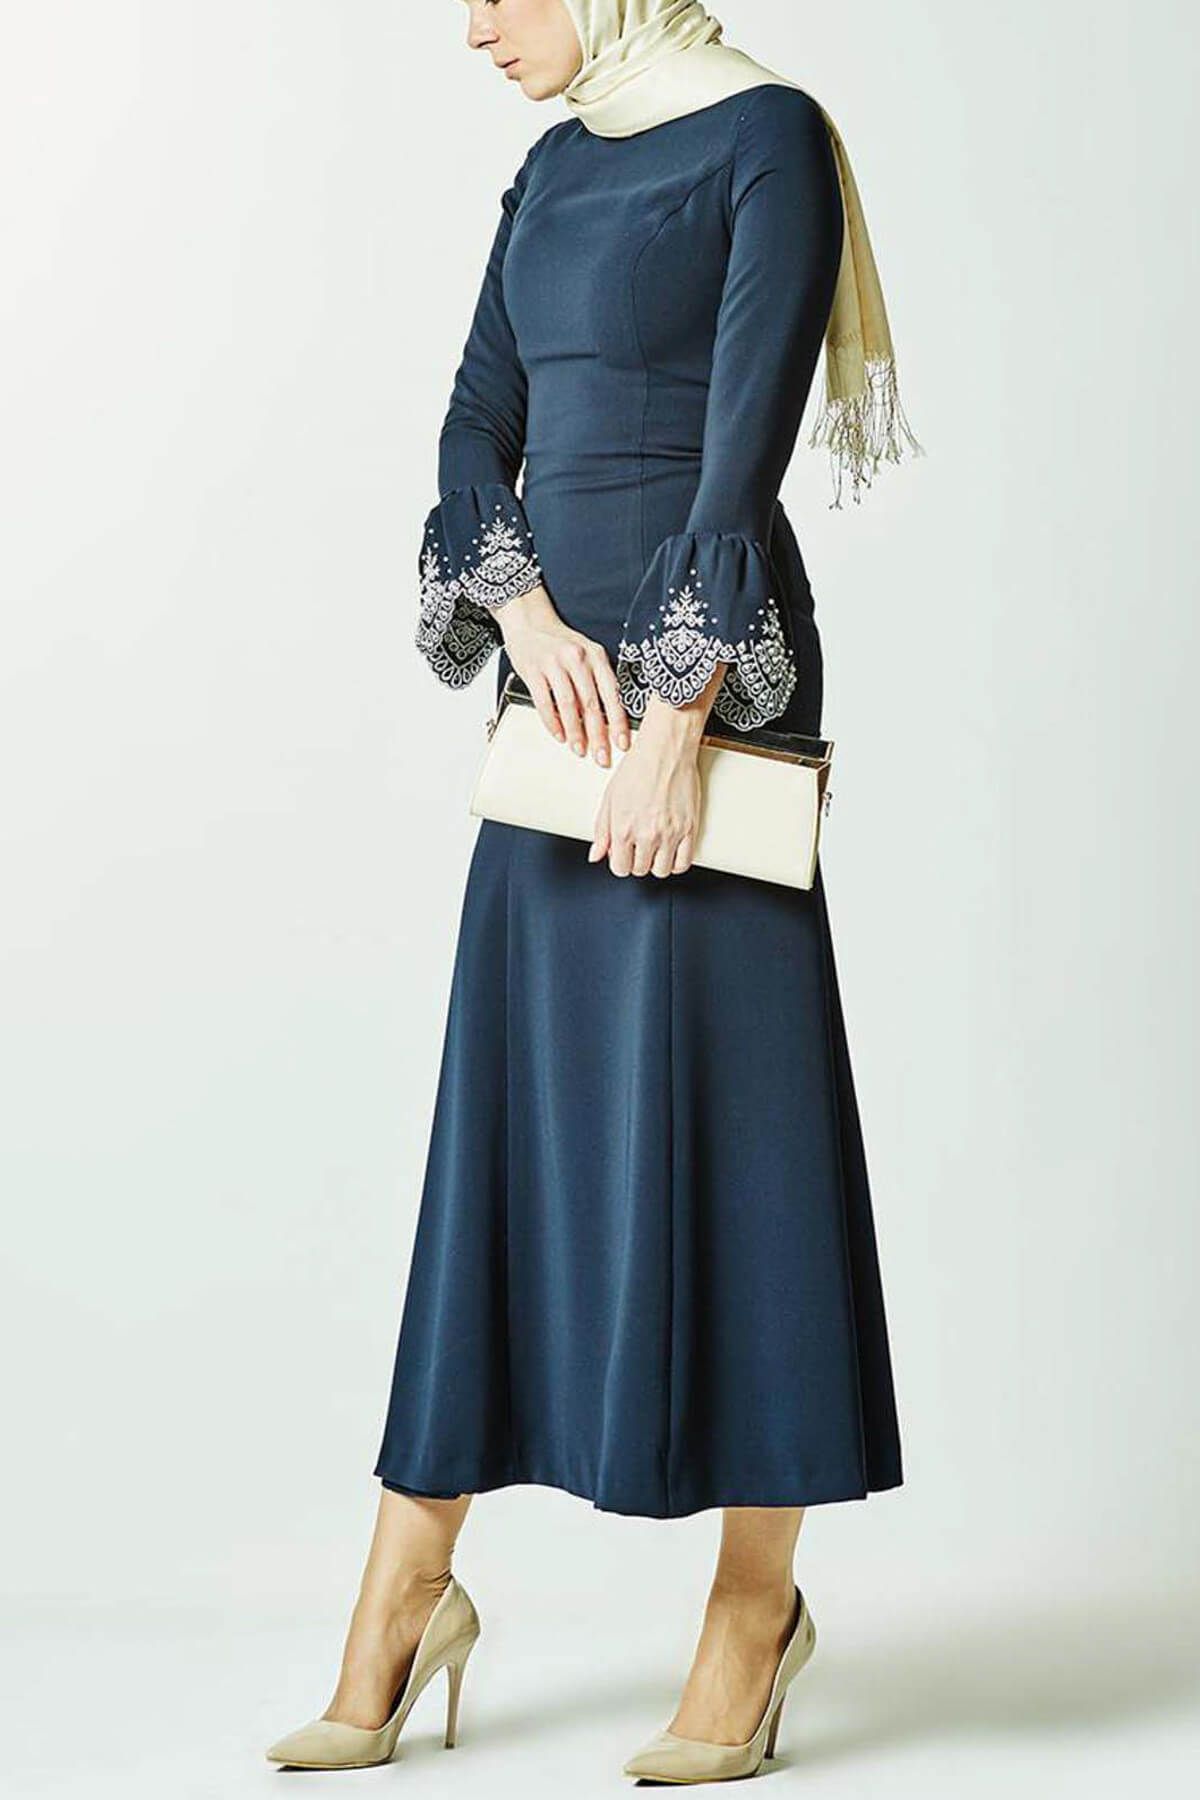 Kayra Kadın Abiye Elbise Lacivert KA-A7-23109-11